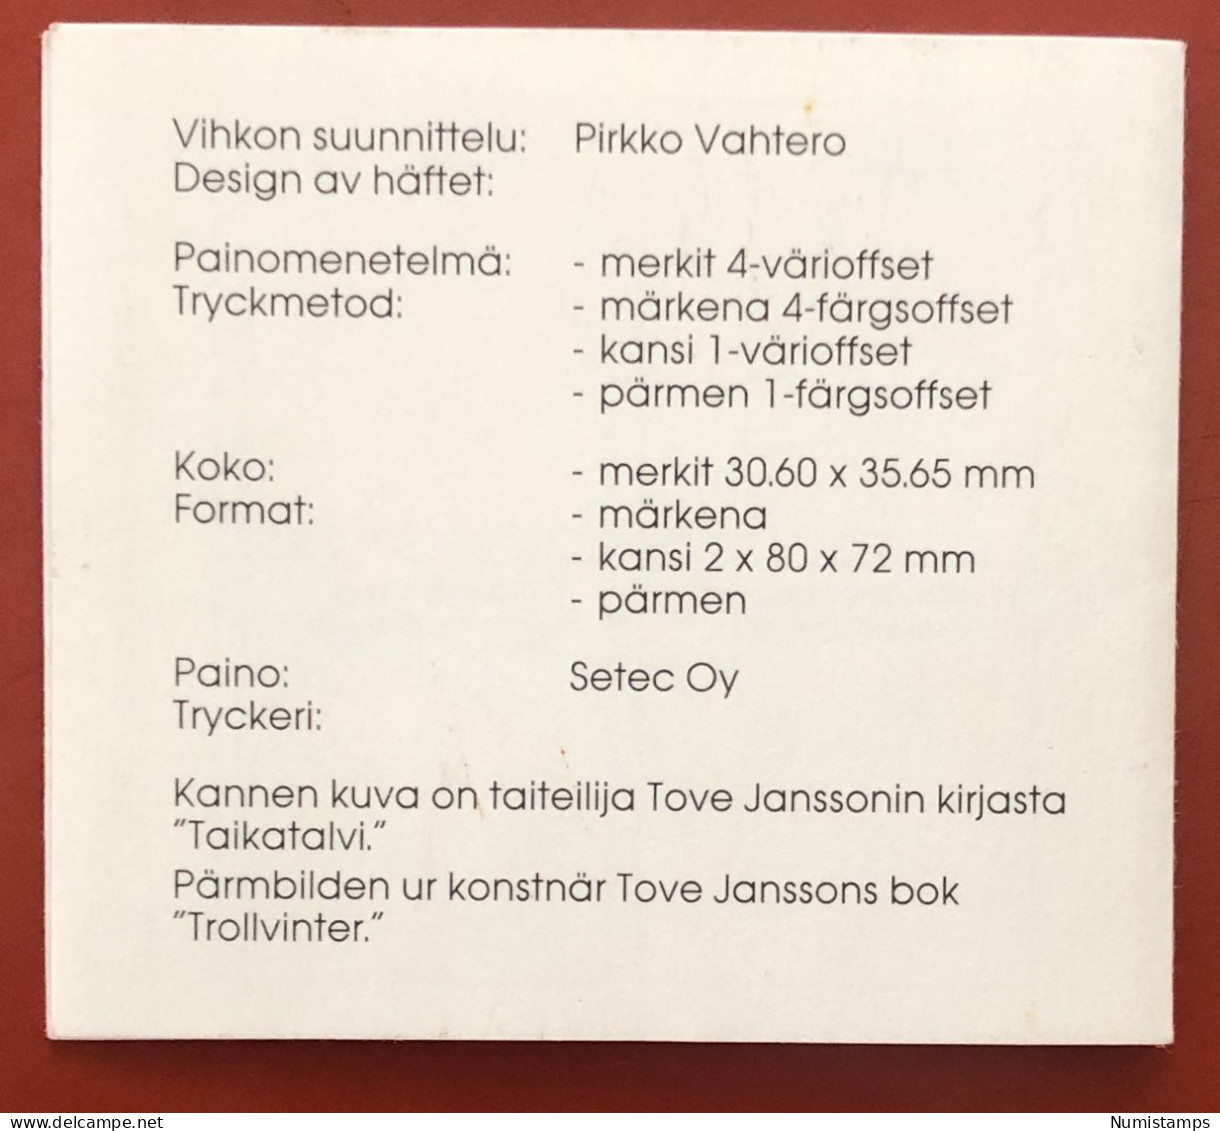 Finland - Philatelic Exhibition NORDIA '93 - The Moomins - 1992 - Hojas Completas